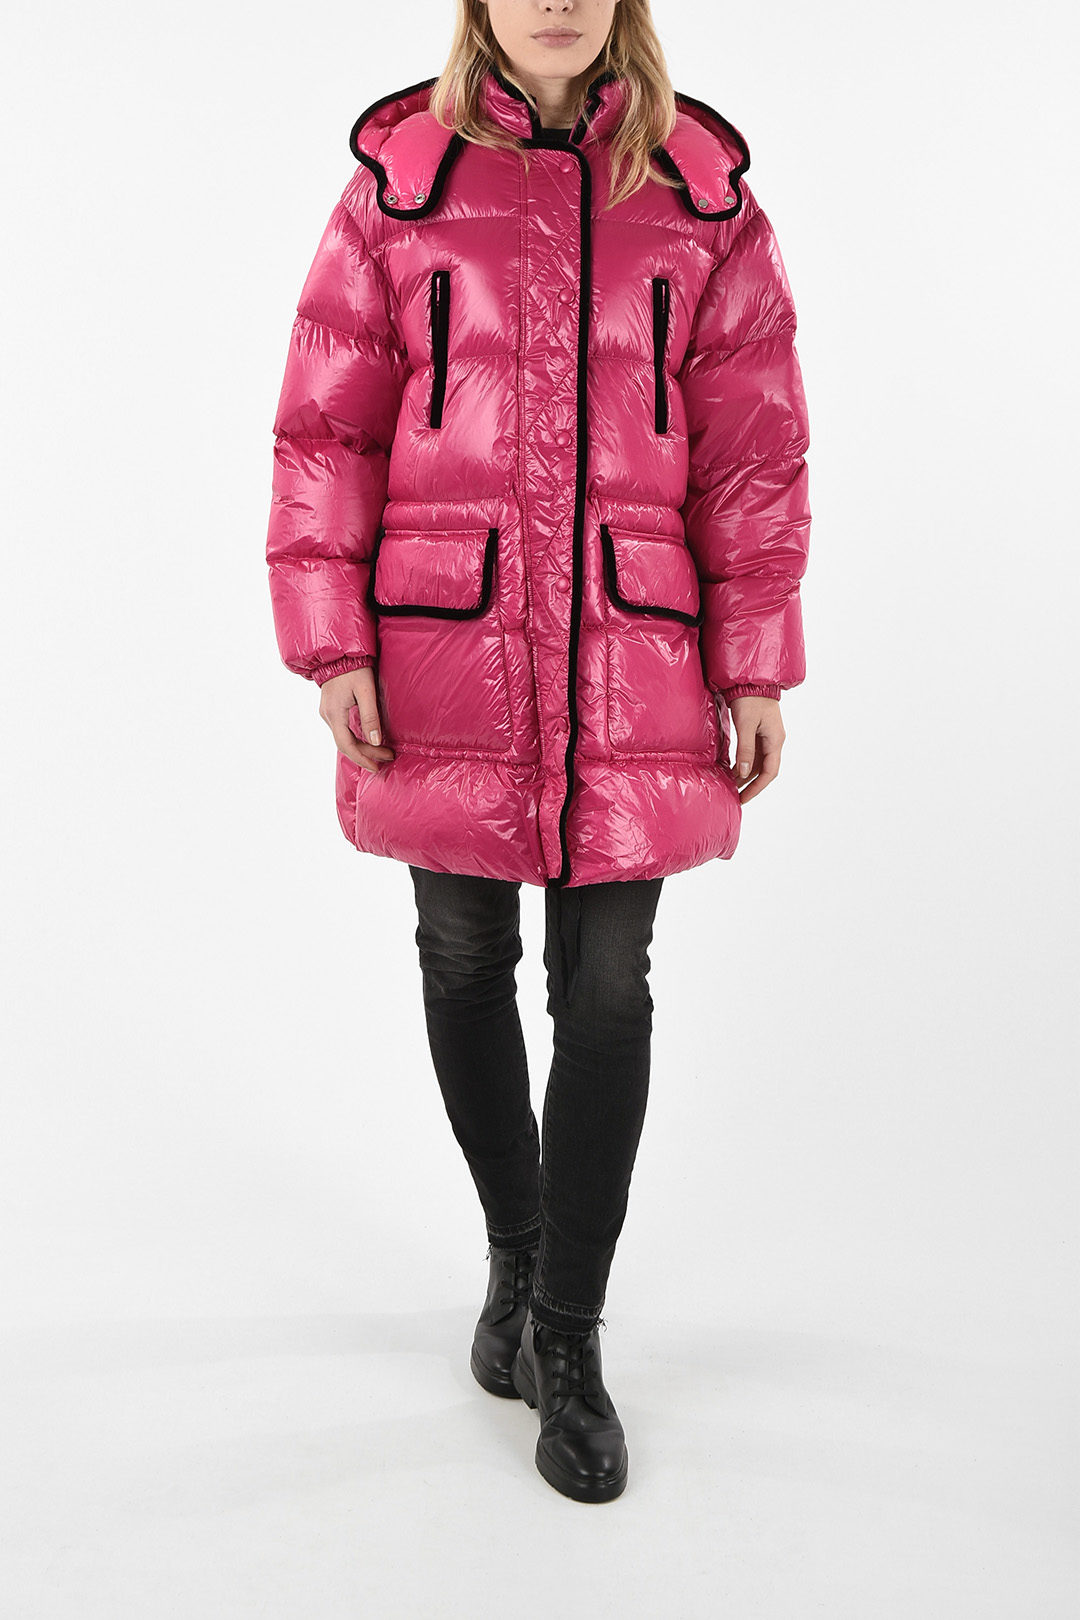 Red Valentino Nylon Multi Down Jacket women - Glamood Outlet